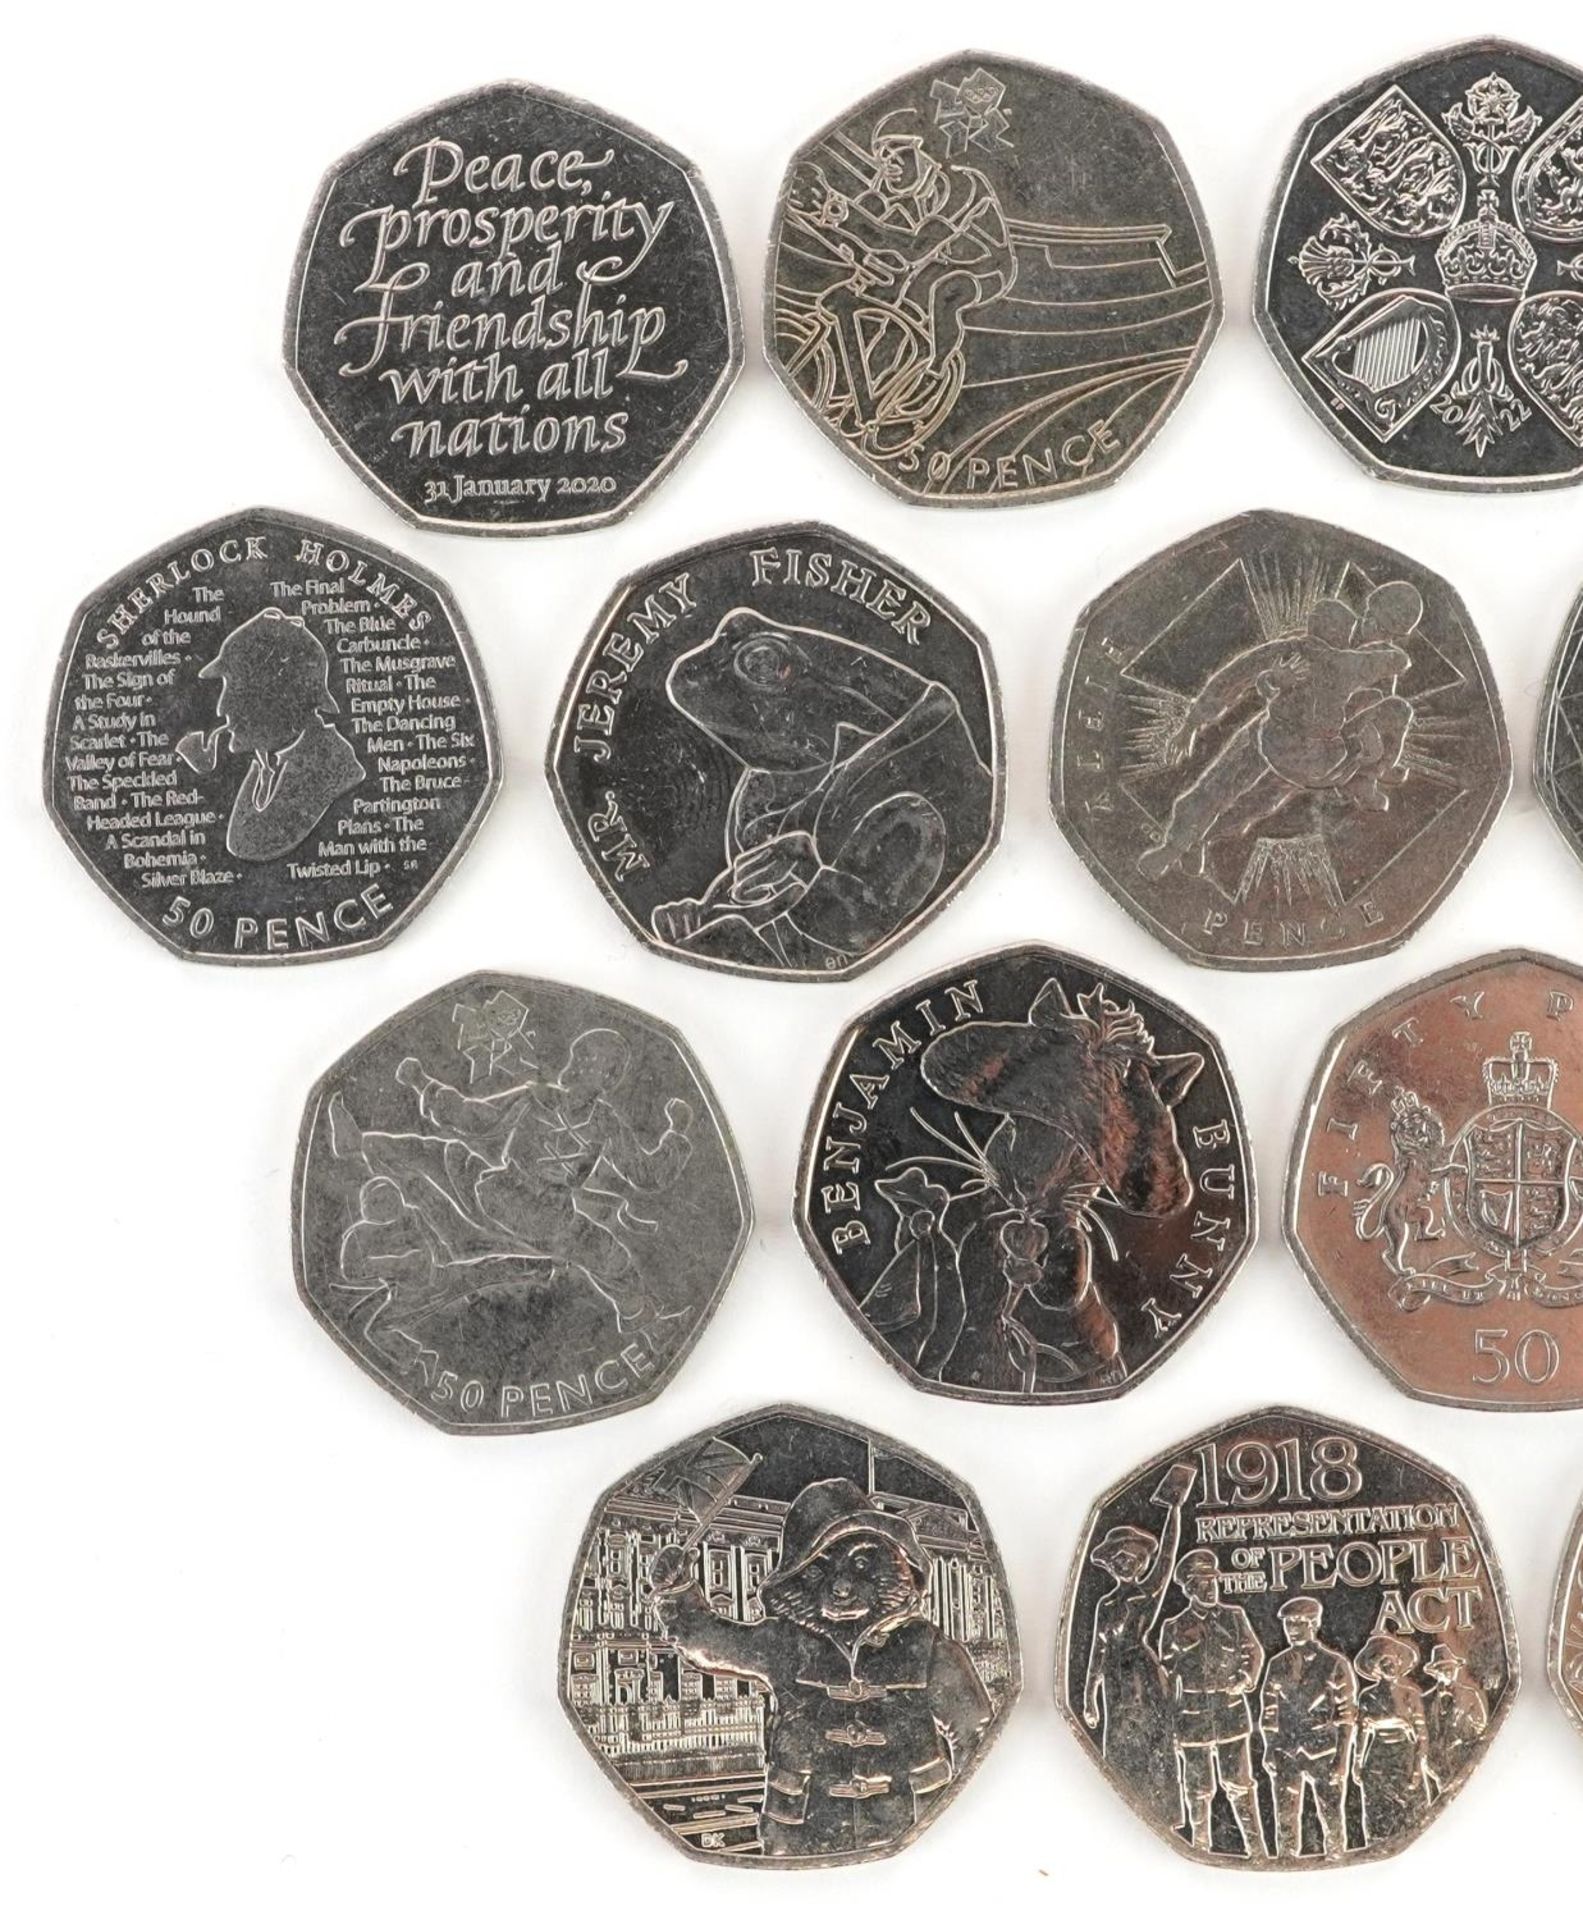 Twenty Elizabeth II fifty pence pieces, various designs including London 2012 Olympics and - Bild 2 aus 6